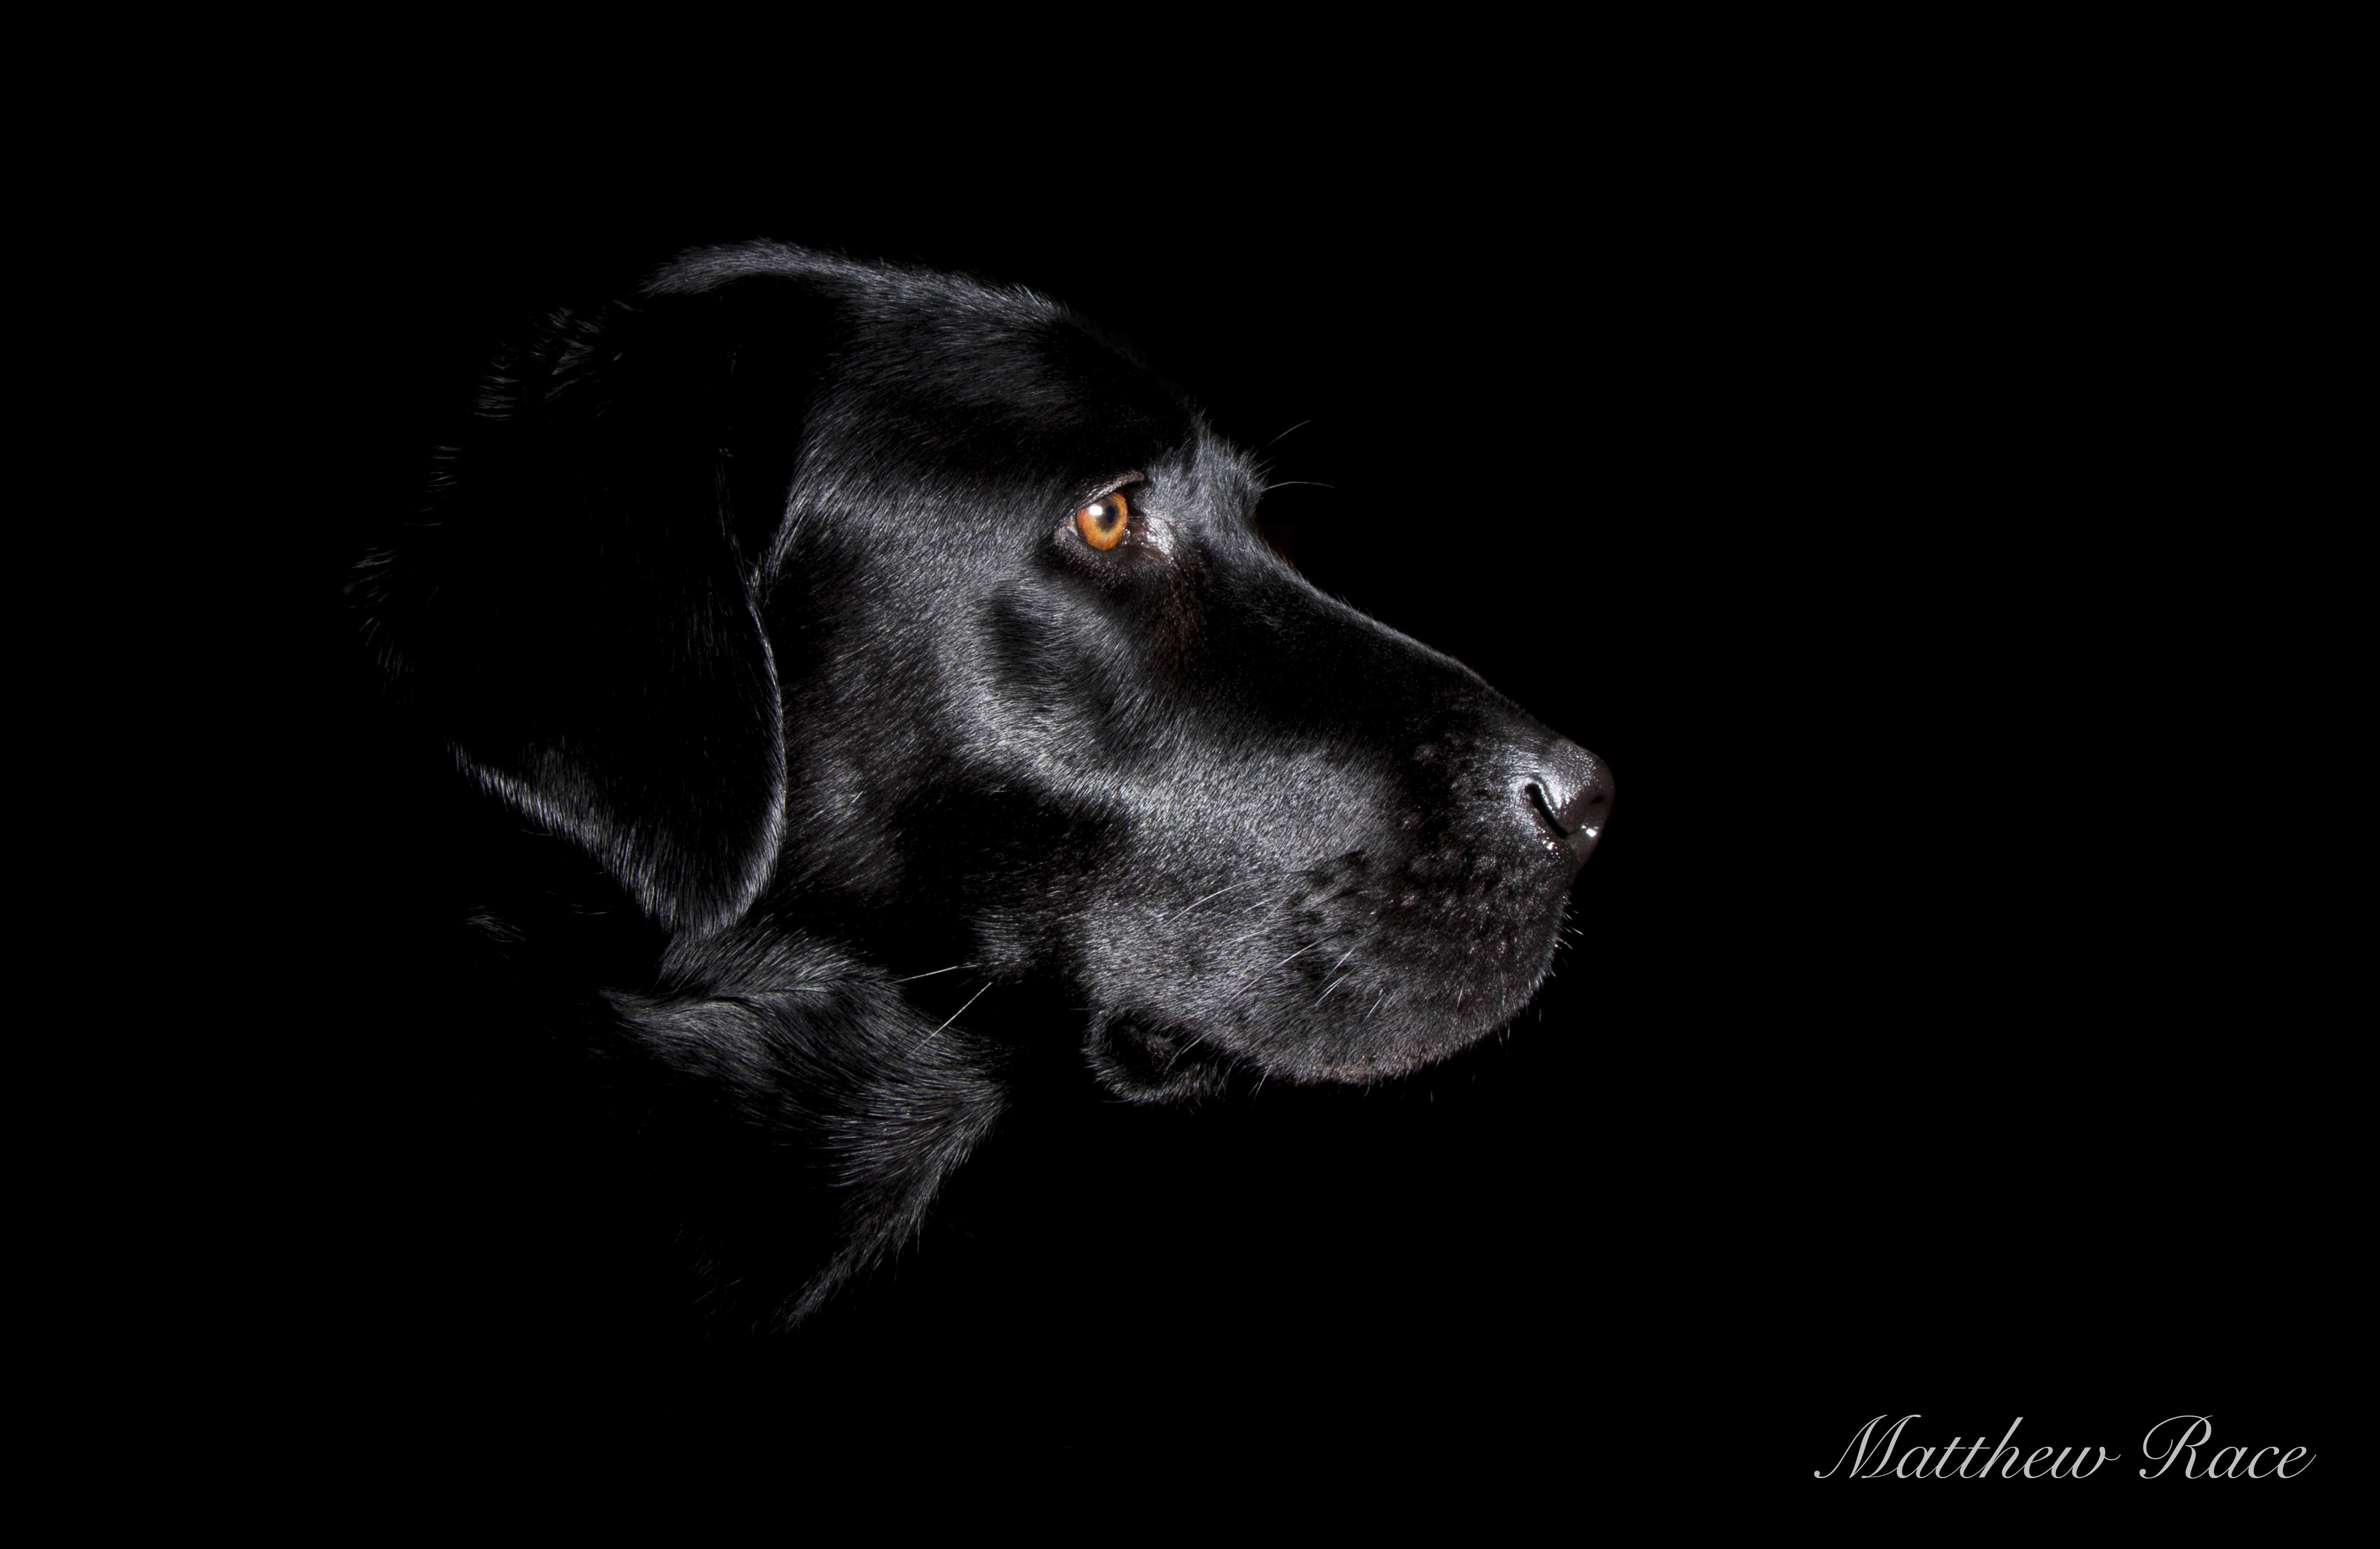 Black Labrador